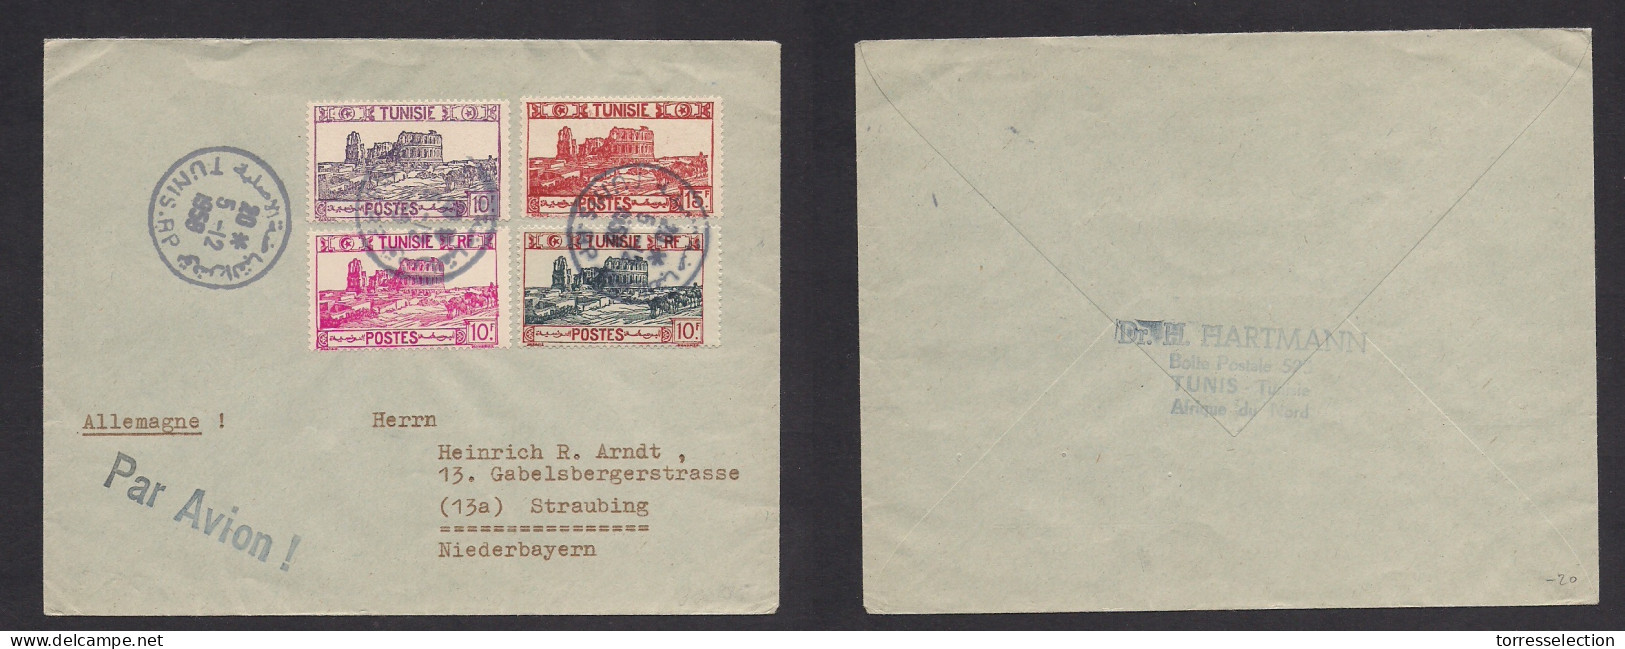 TUNISIA. 1958 (5 Dec) Tunis RP - Germany, Niederbayern, Stranbing. Air Multifkd Env VF Same Design Value Stamp Three Dif - Tunisia